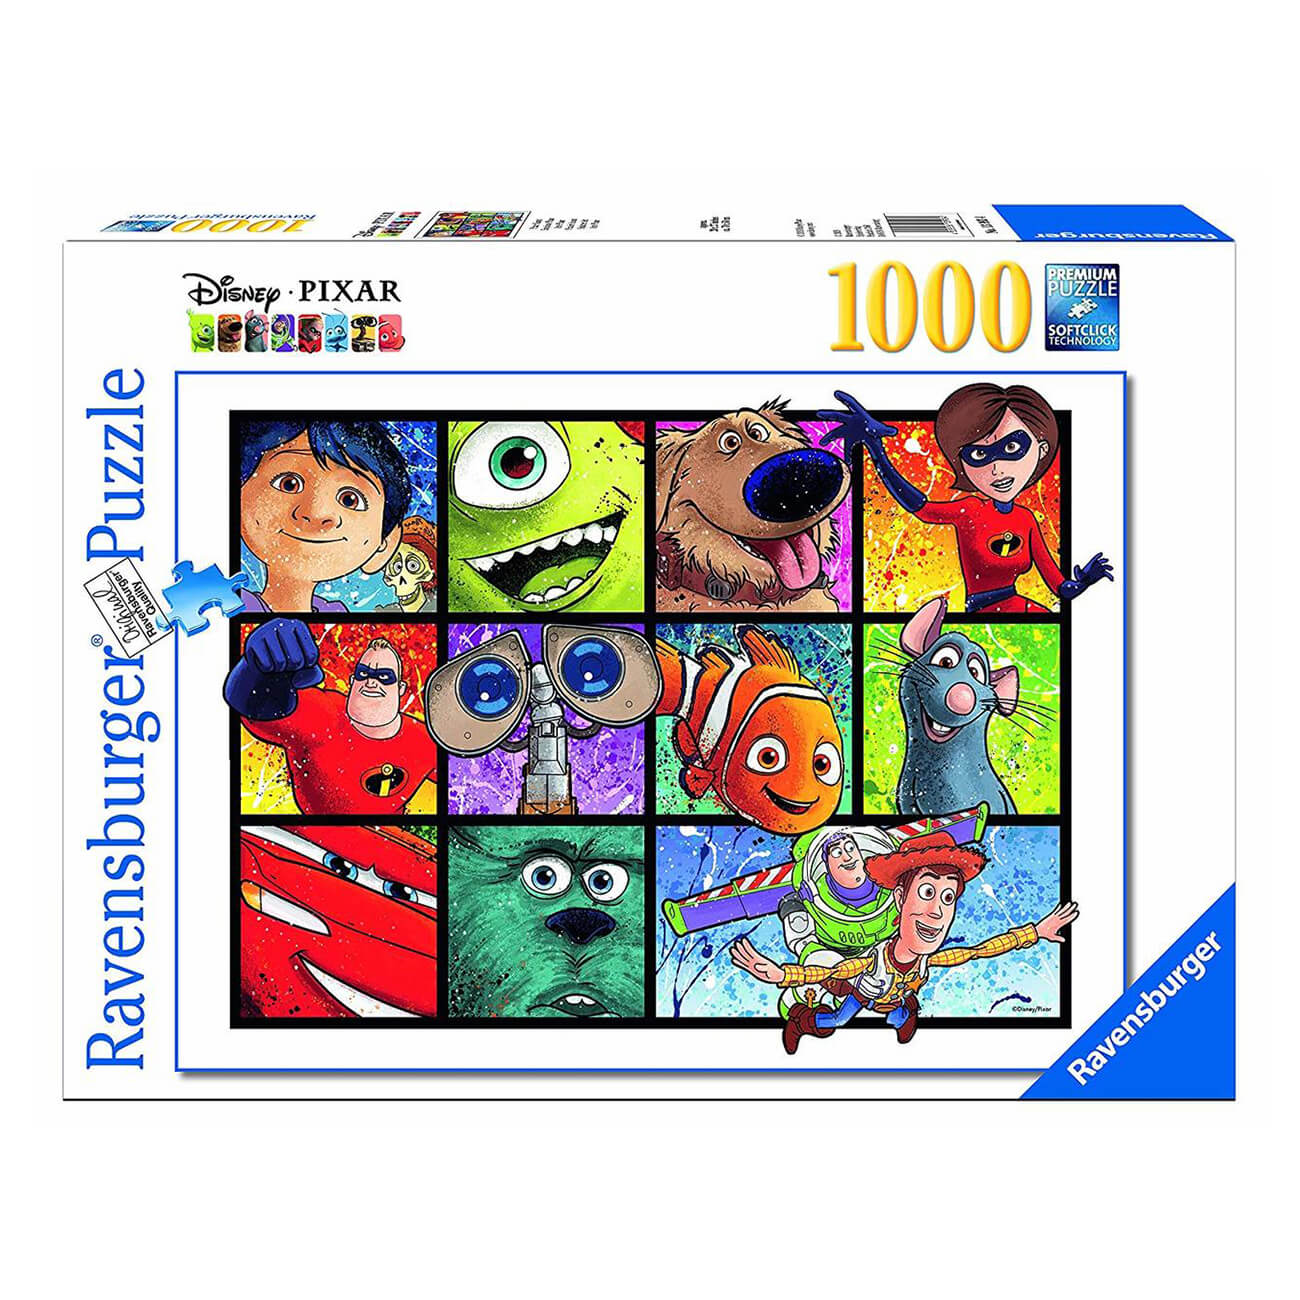 Ravensburger Disney-Pixar Splatter Art 1000 Piece Jigsaw Puzzle